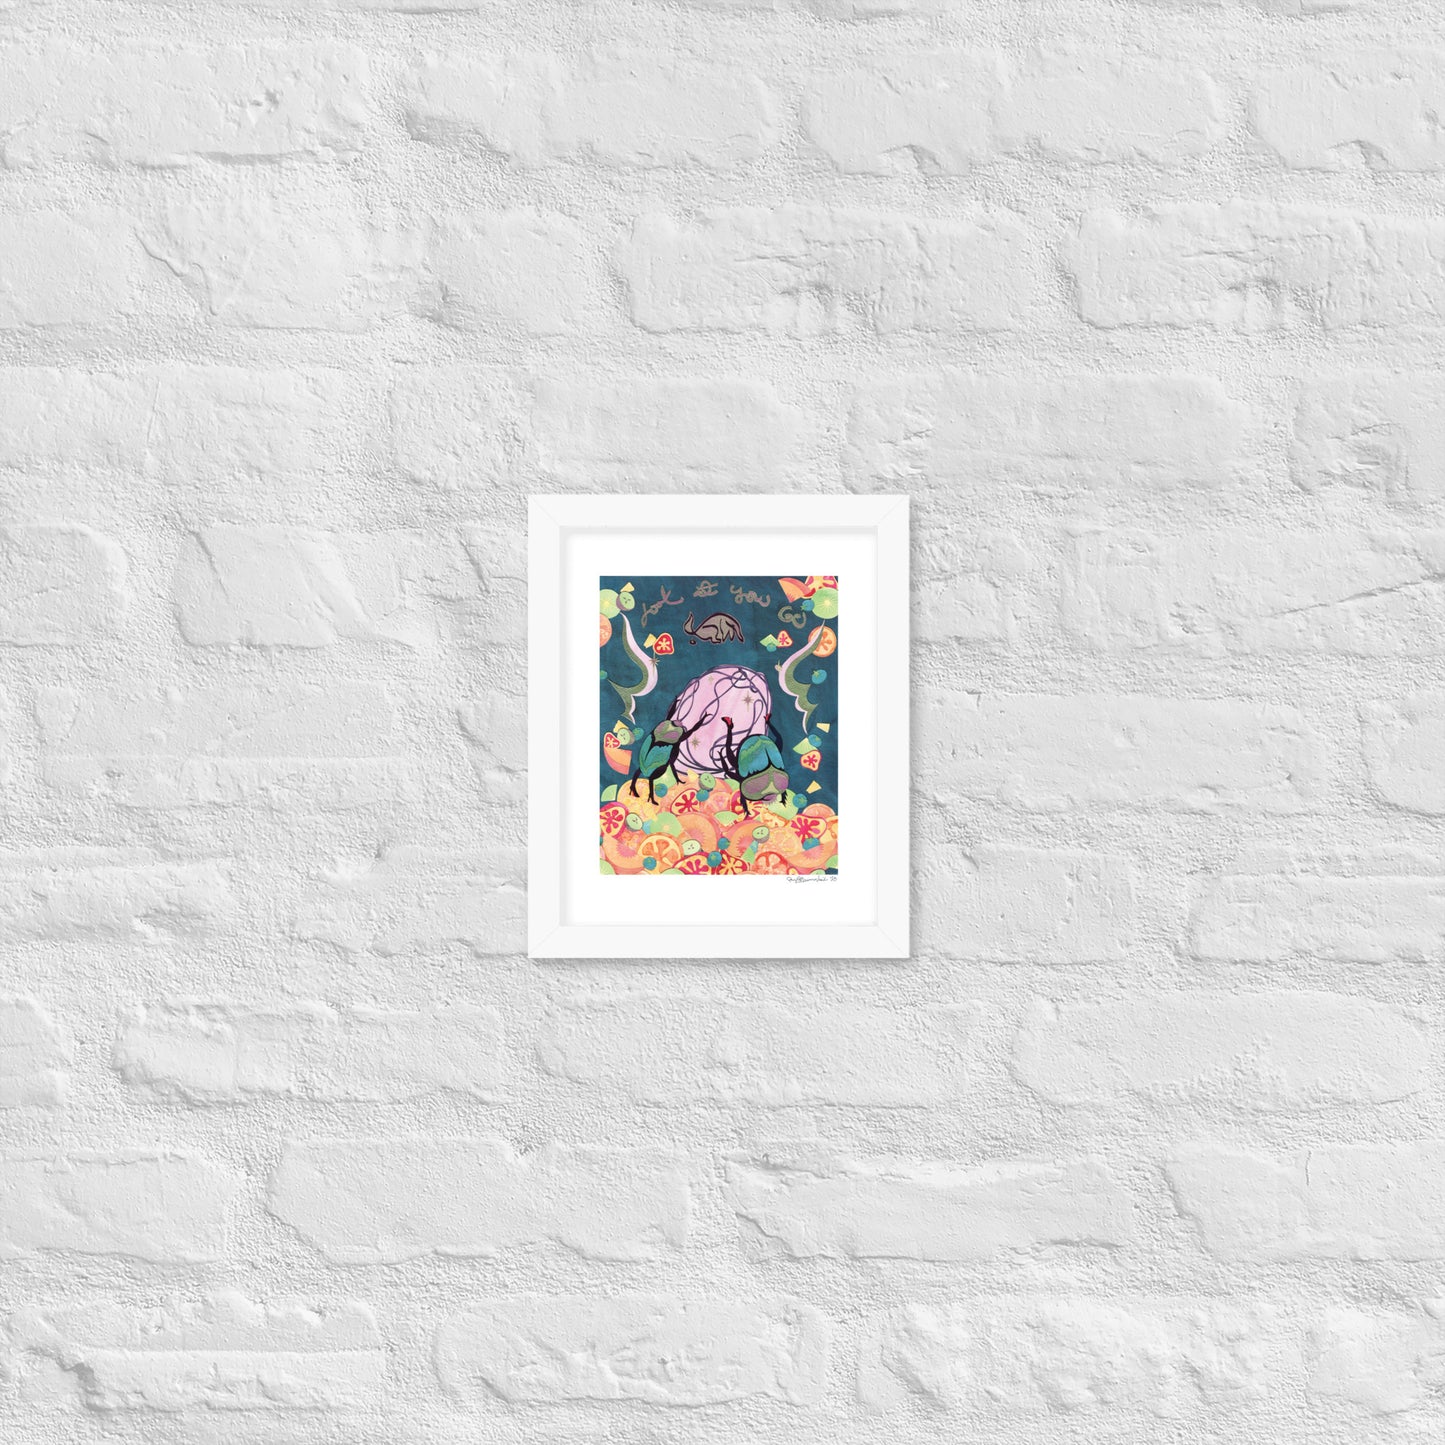 Look at You Go! - Framed Poster Print - Dung Beetle Art - Feminist Art